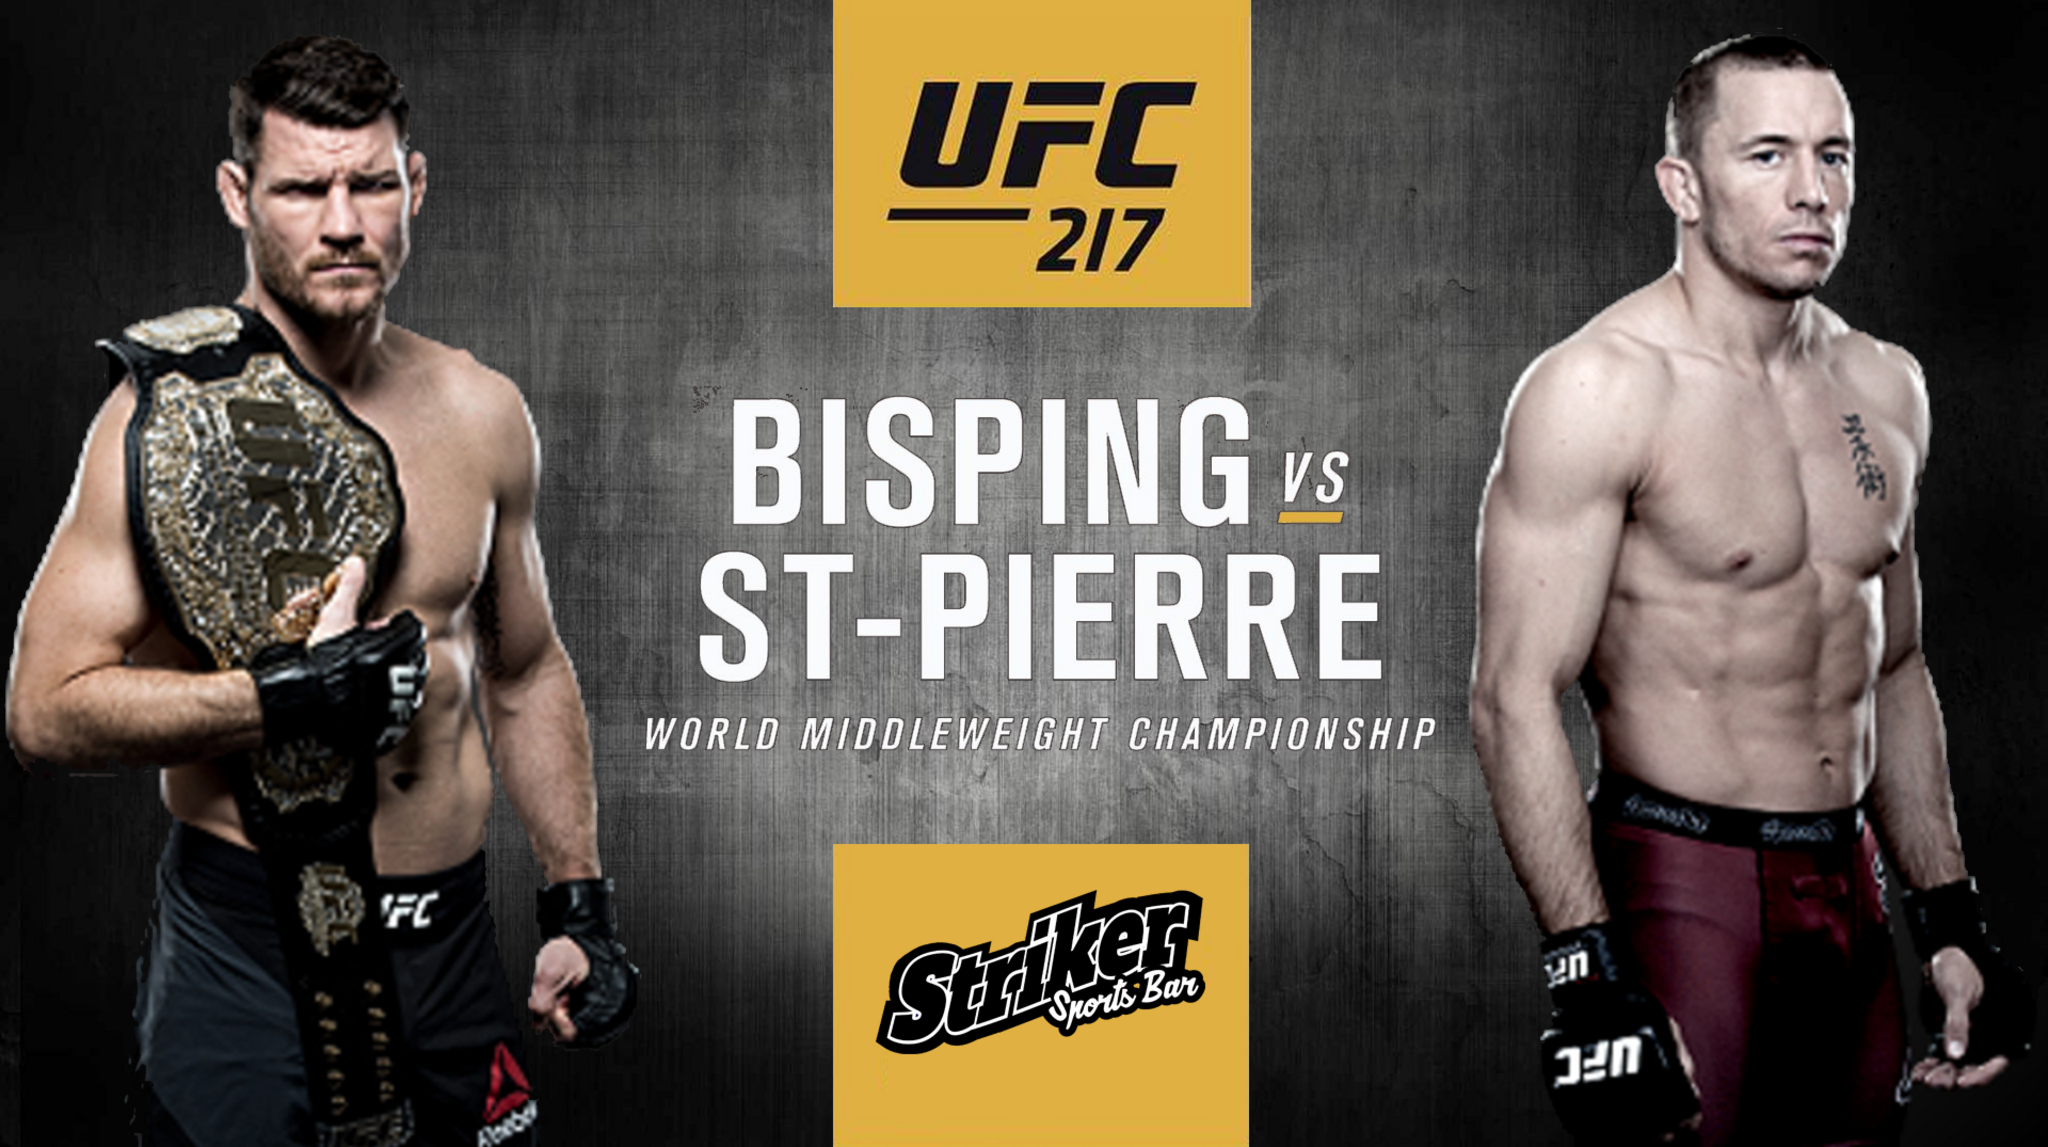 UFC 217 Bisping vs St-Pierre at Striker!